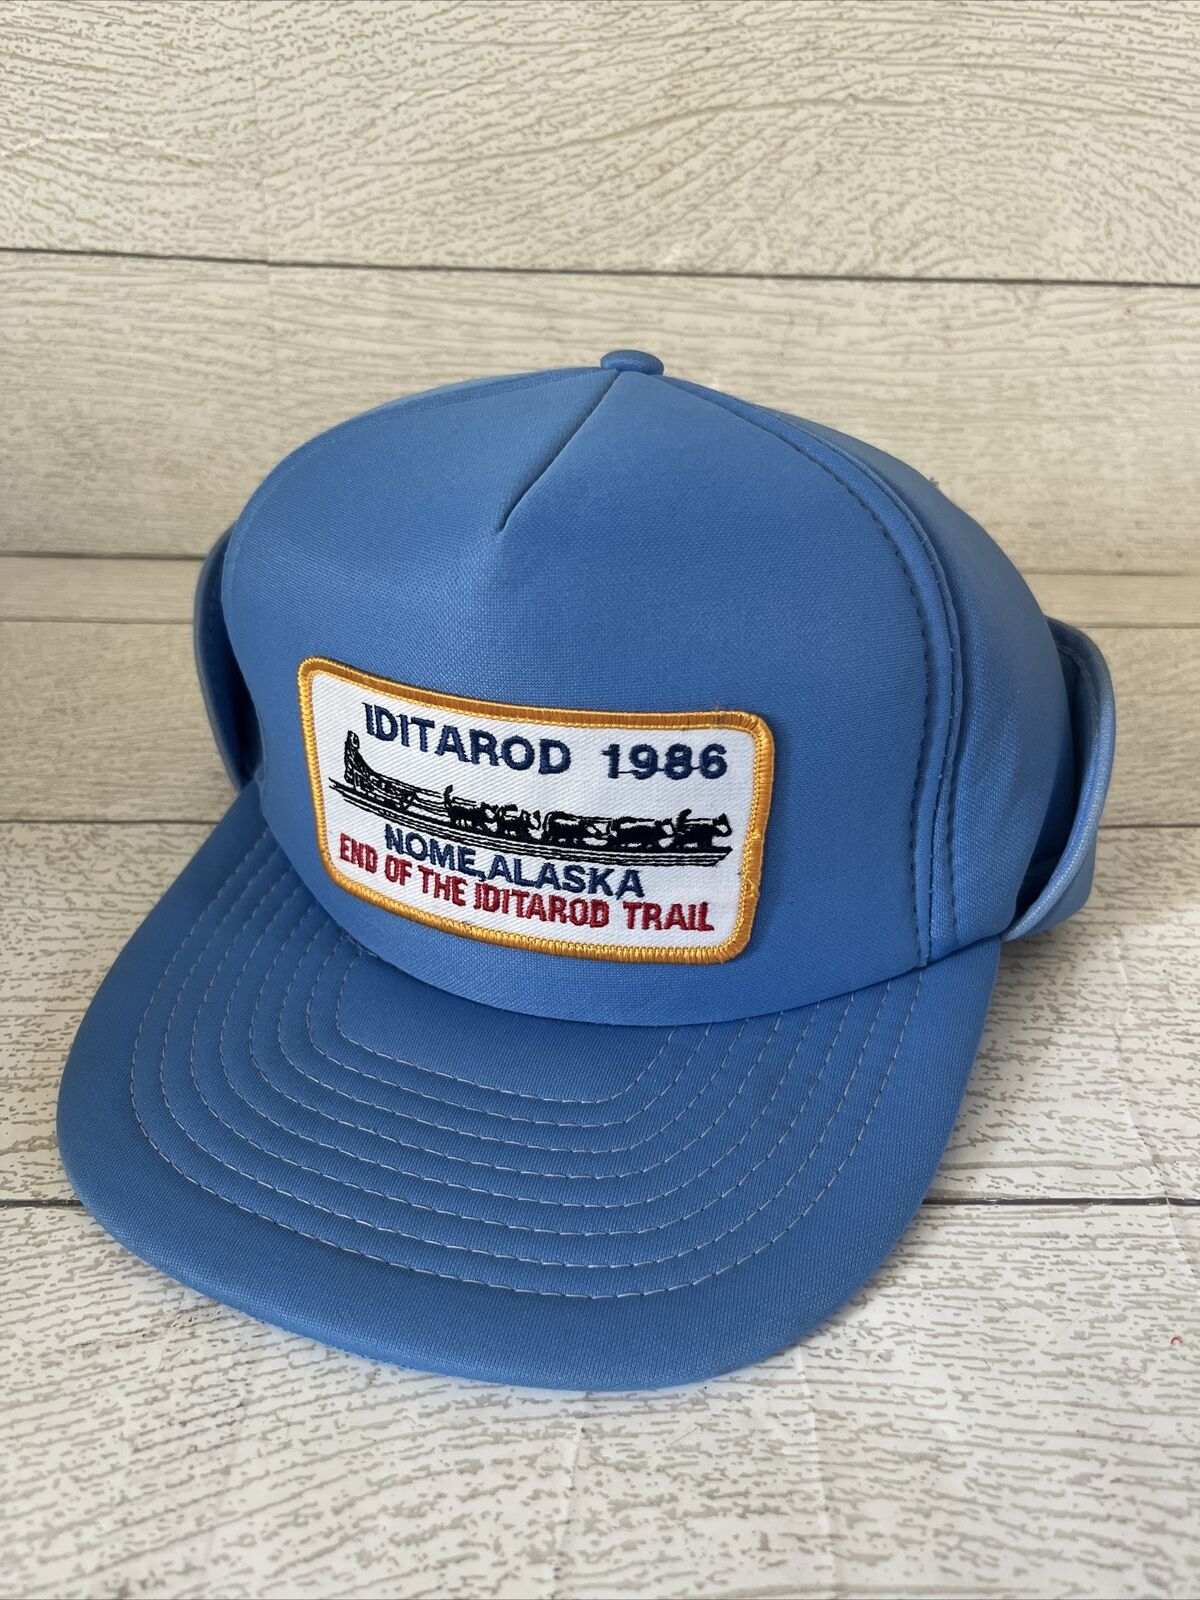 Vintage Sportcap 1986 Iditarod Race Cap Hat Nome Alaska Dog Sled Fold ...